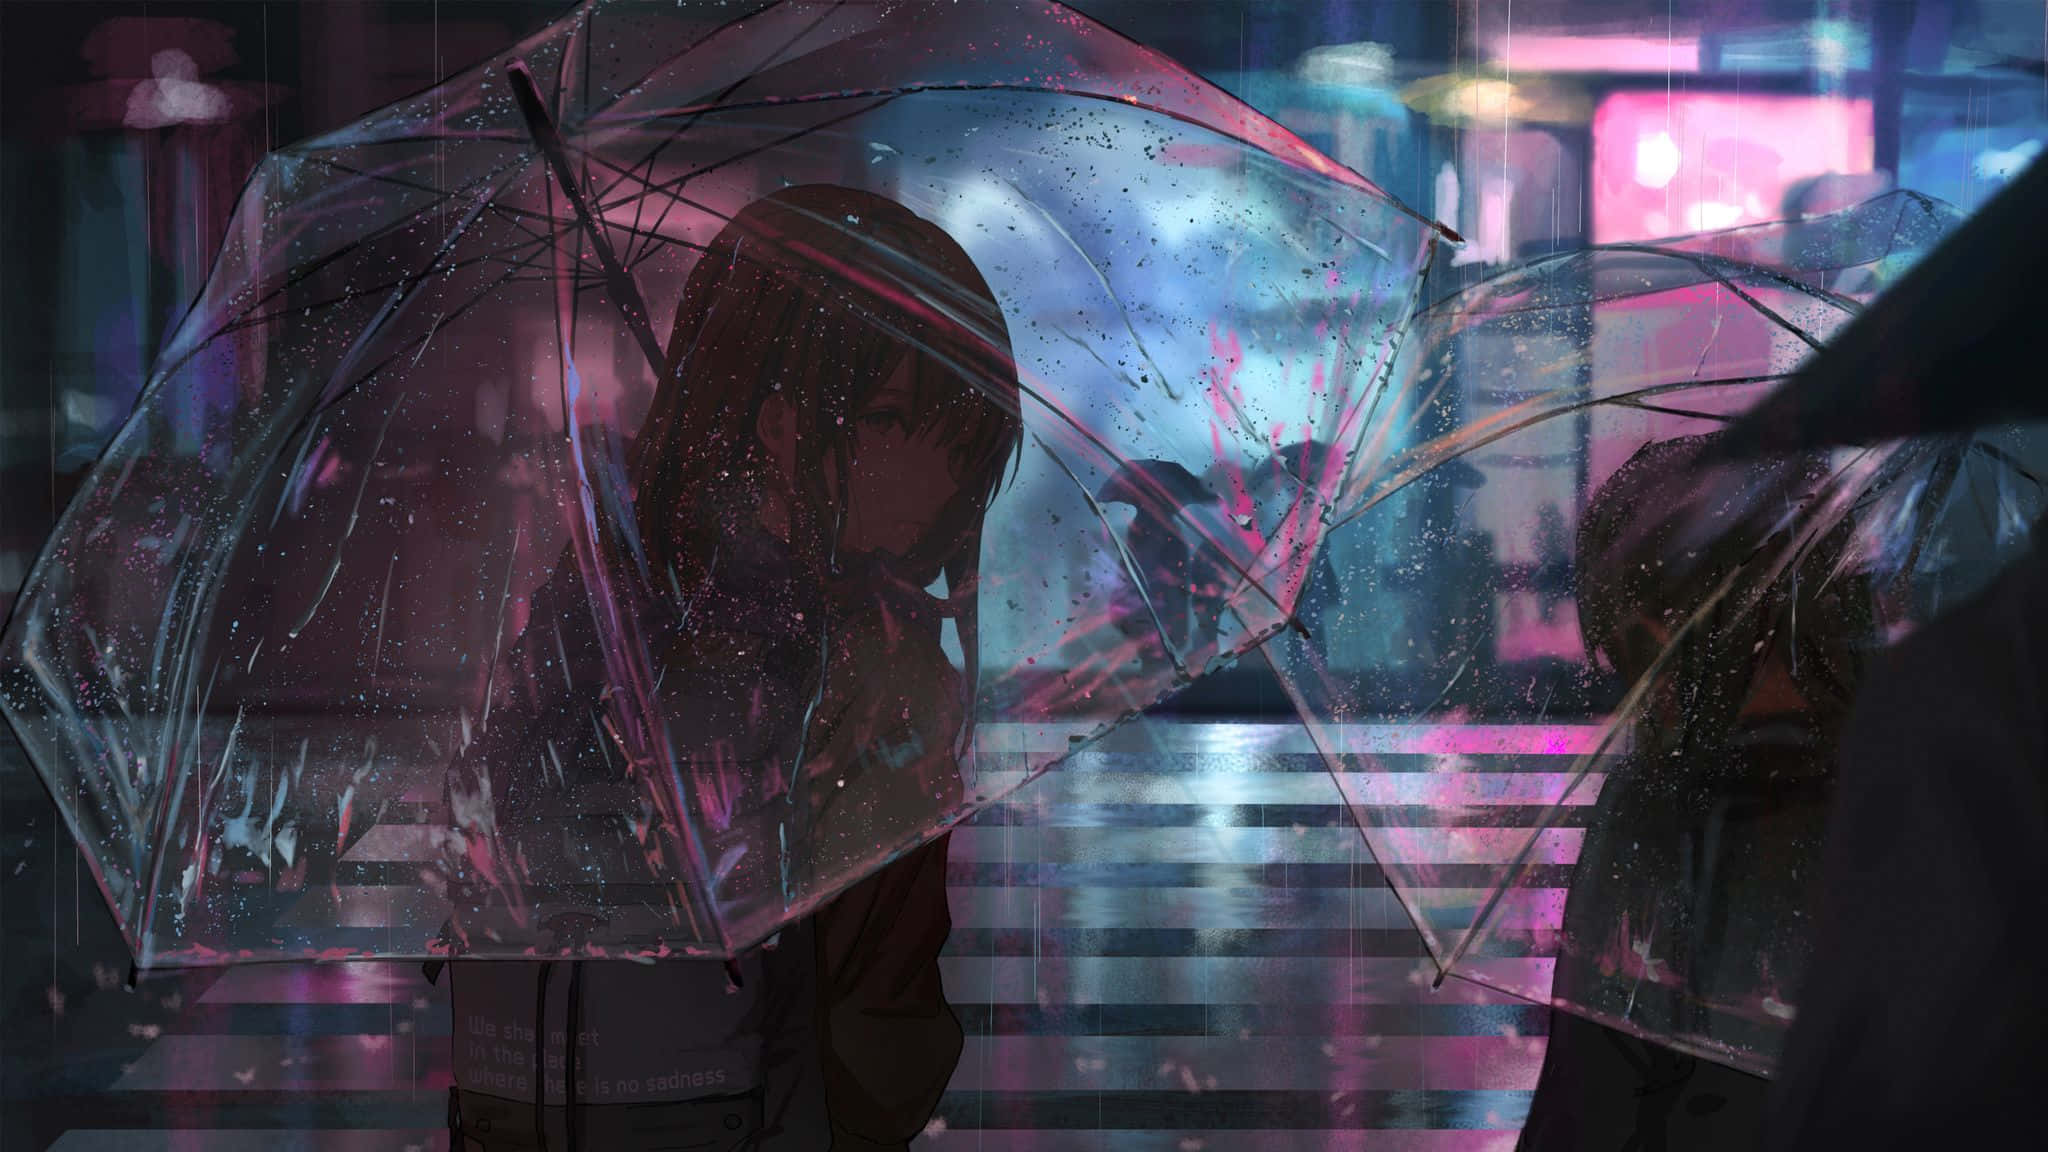 Zweipersonen, Die Regenschirme Halten